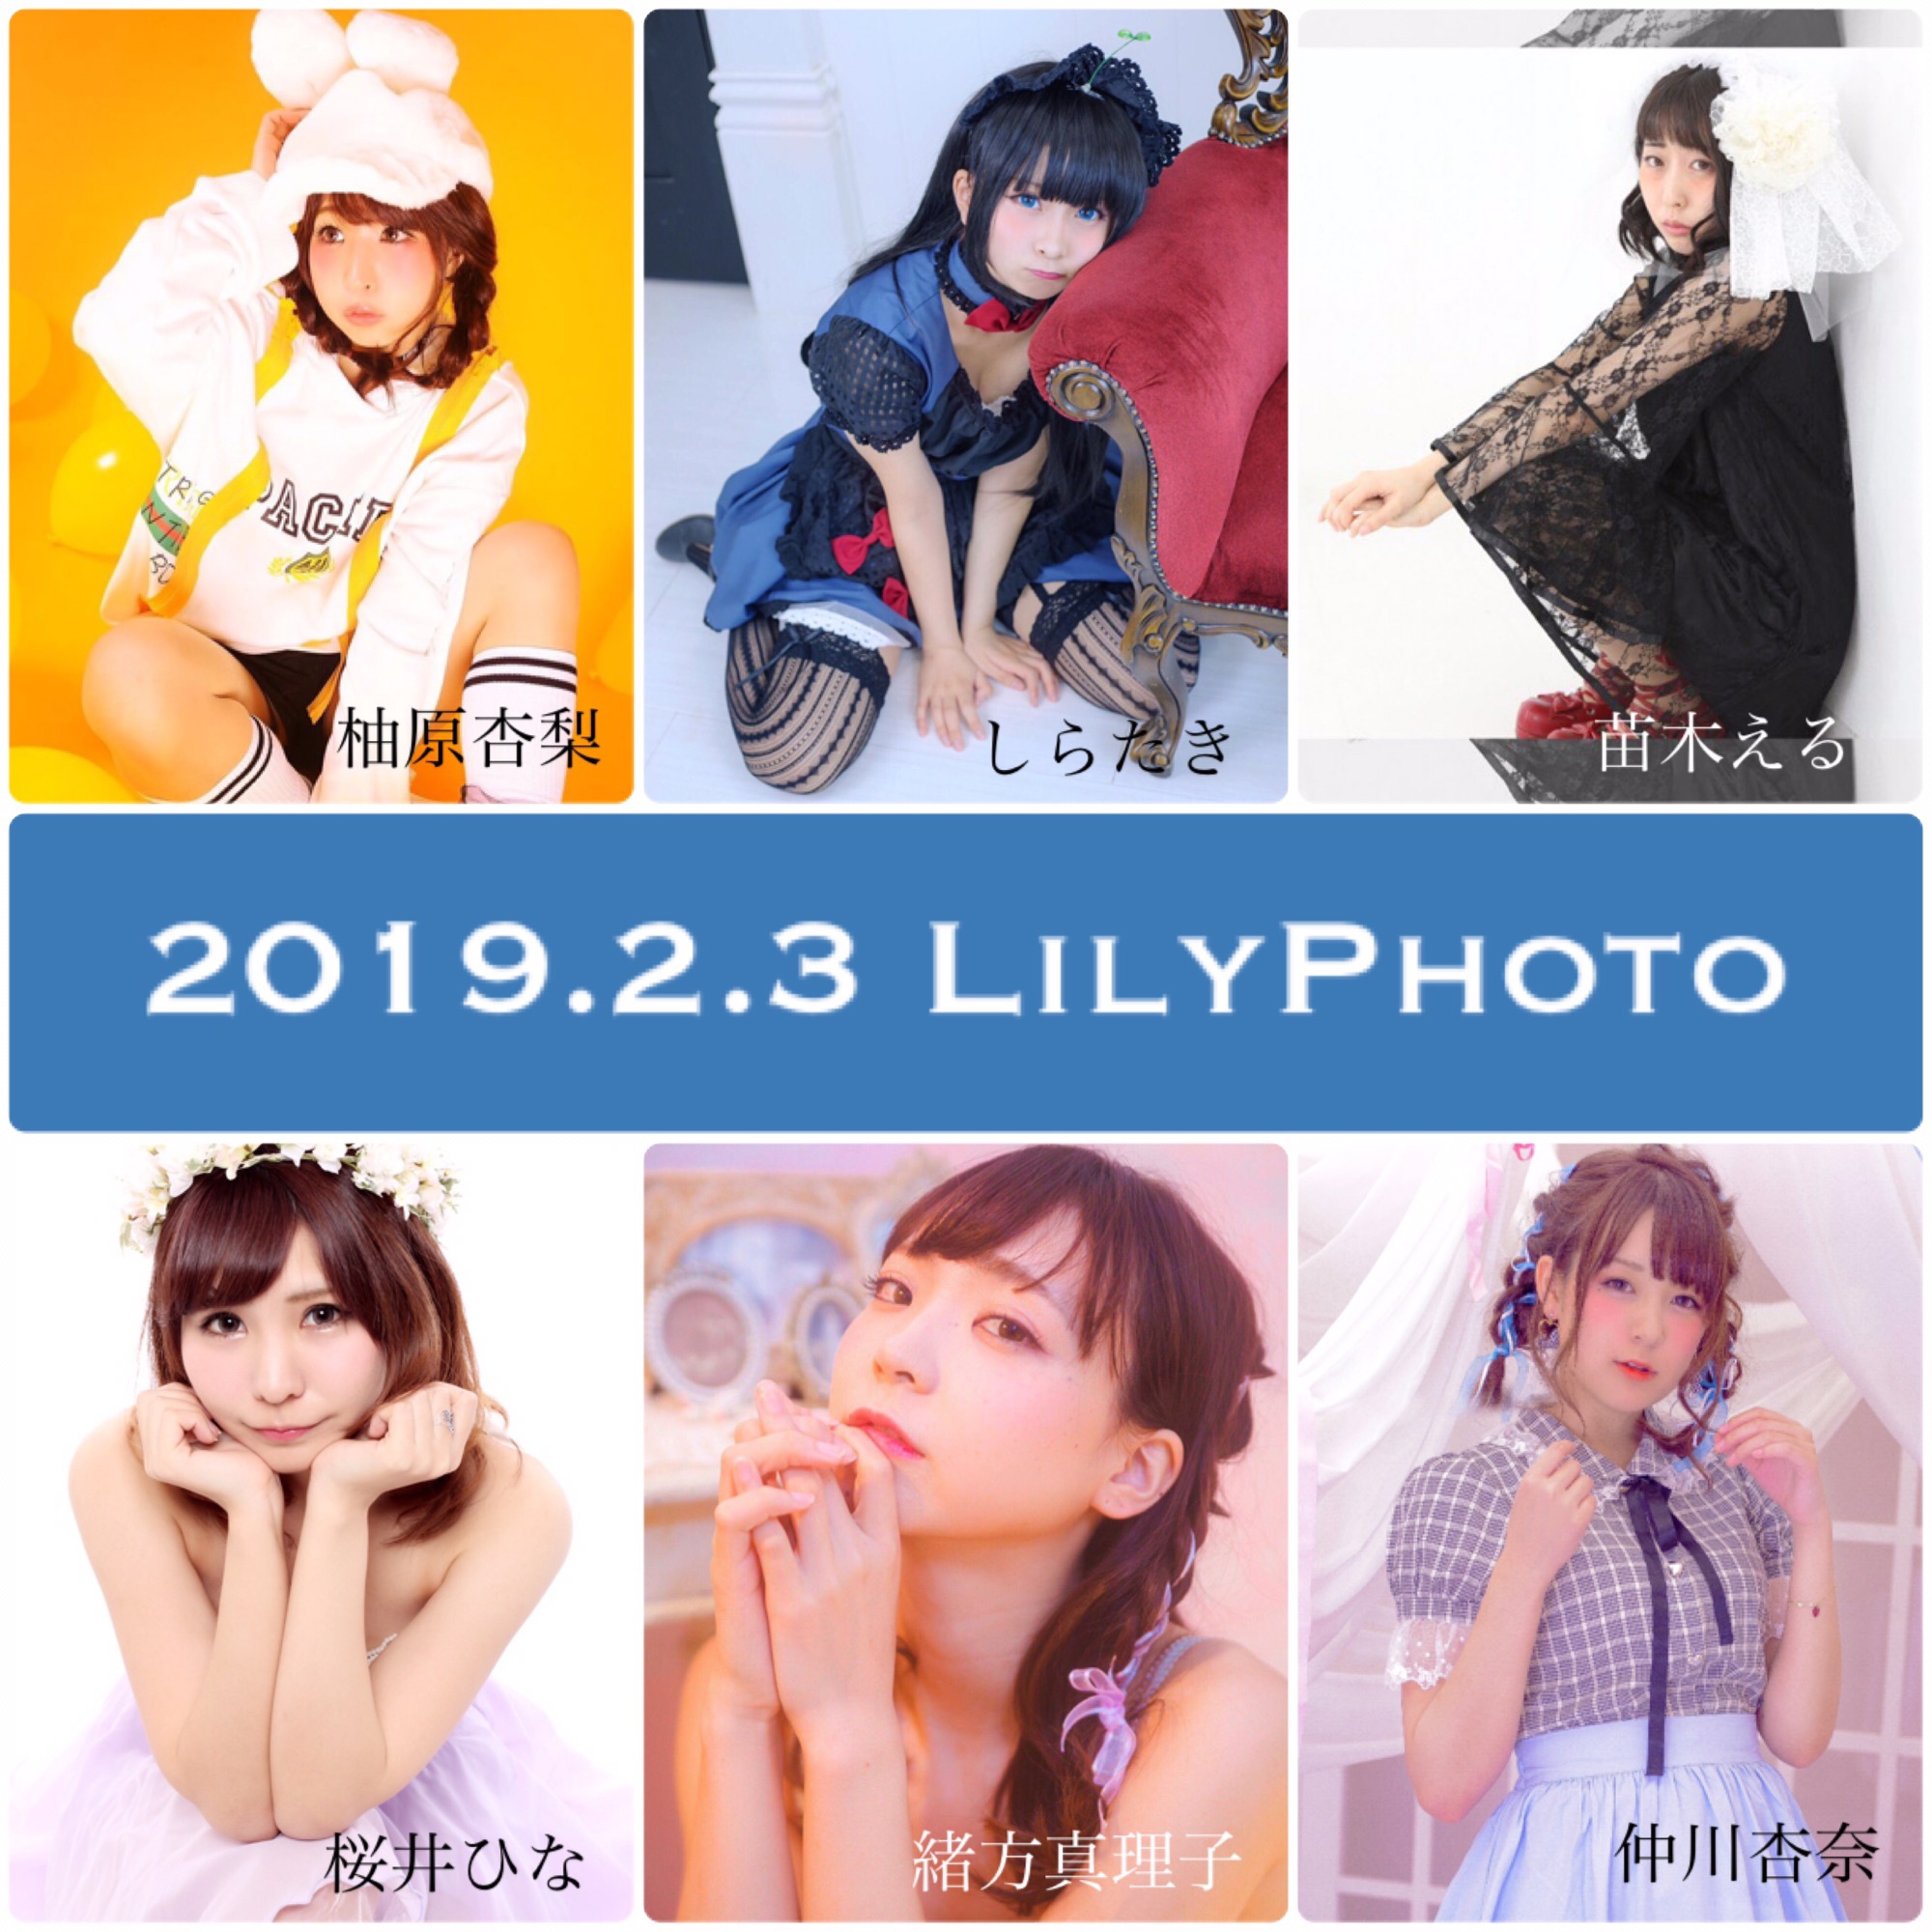 19 2 3 日 Lilyphoto撮影会 Lily Photo